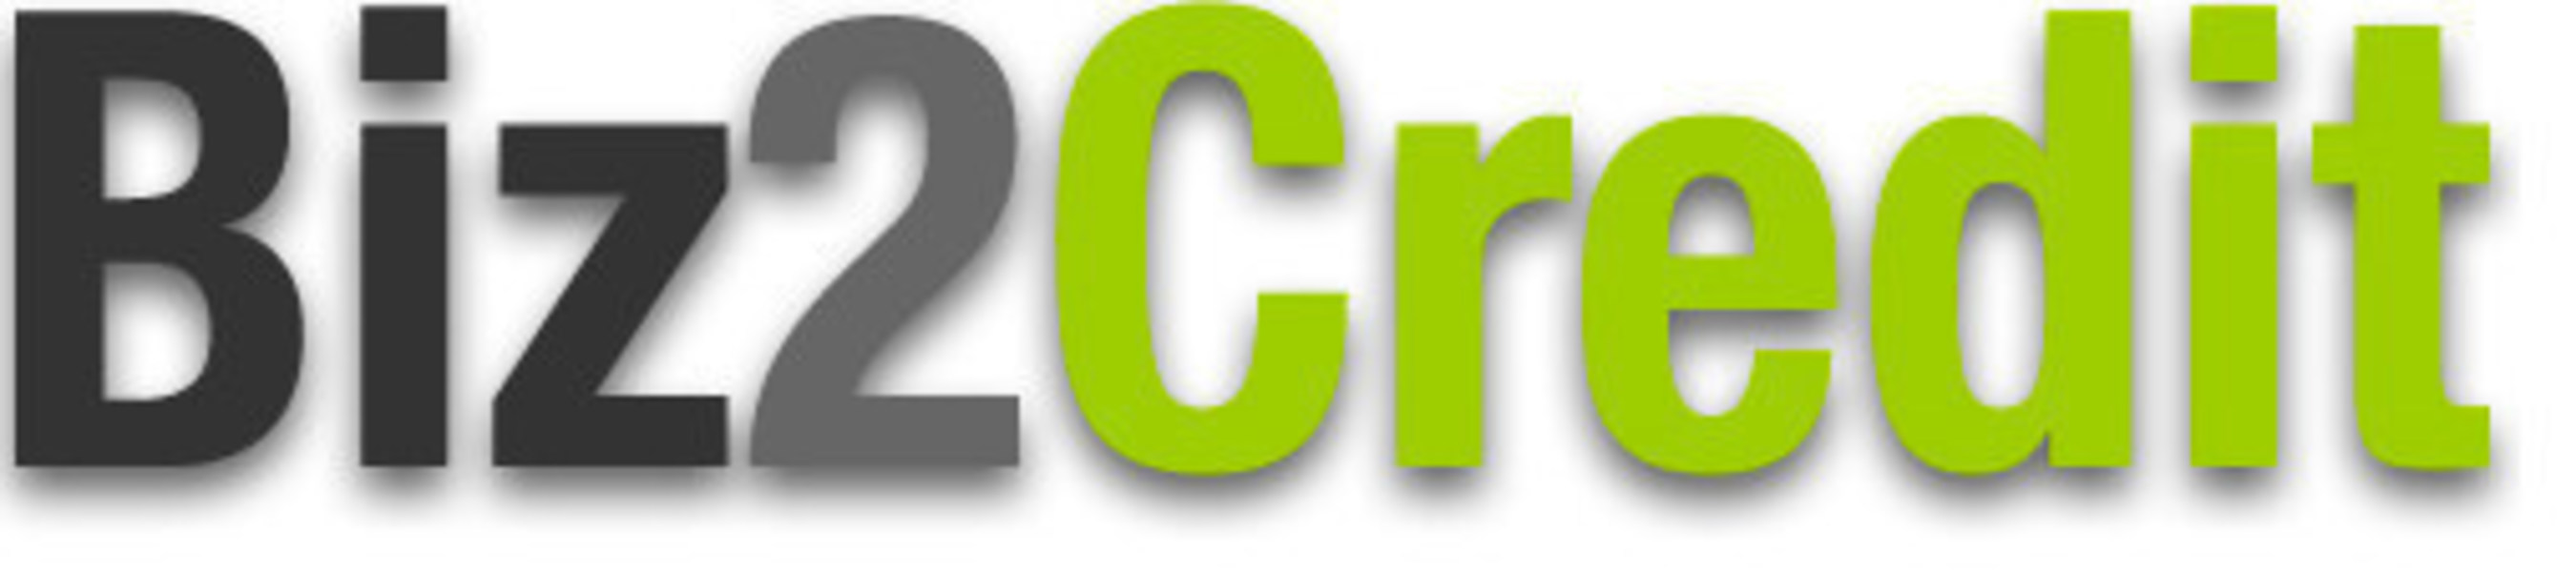 Biz2Credit logo.